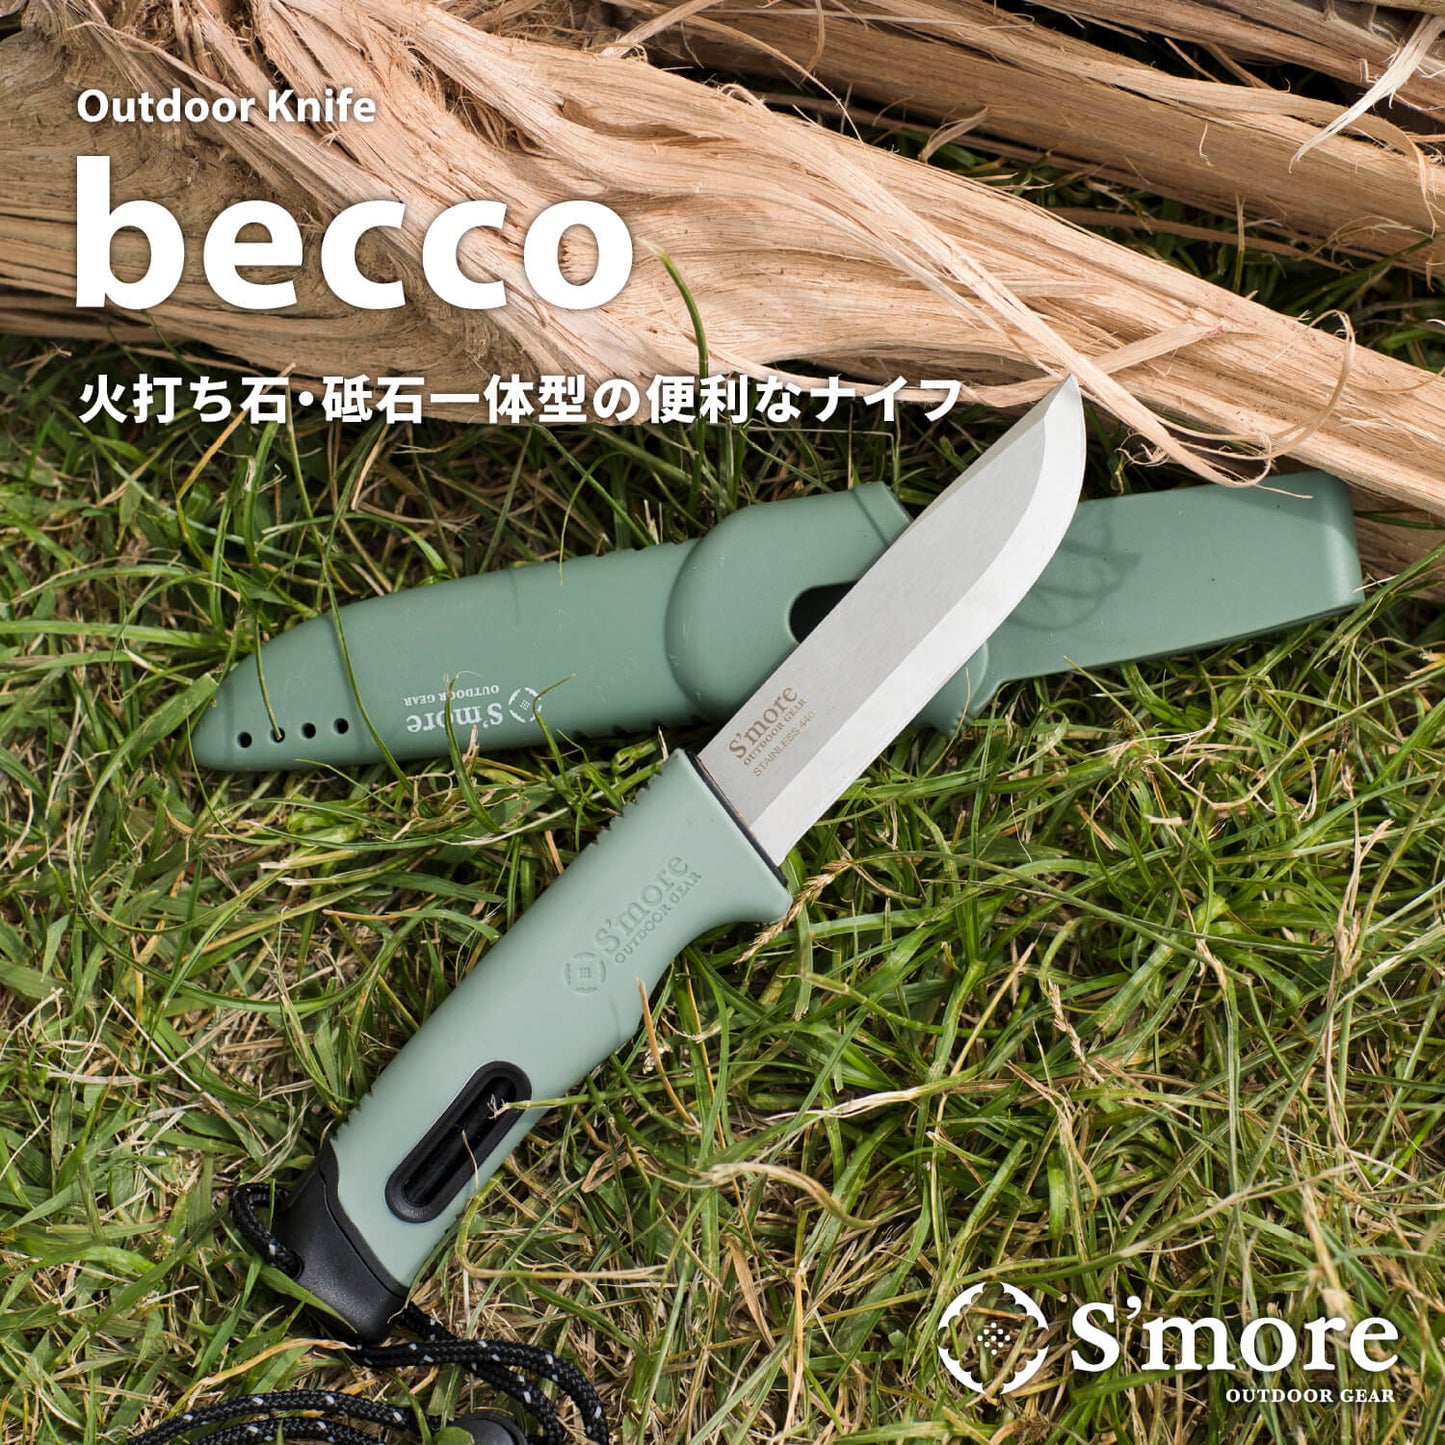 New!!【 becco 】 ベッコ ナイフ 砥石付き 火打石付き